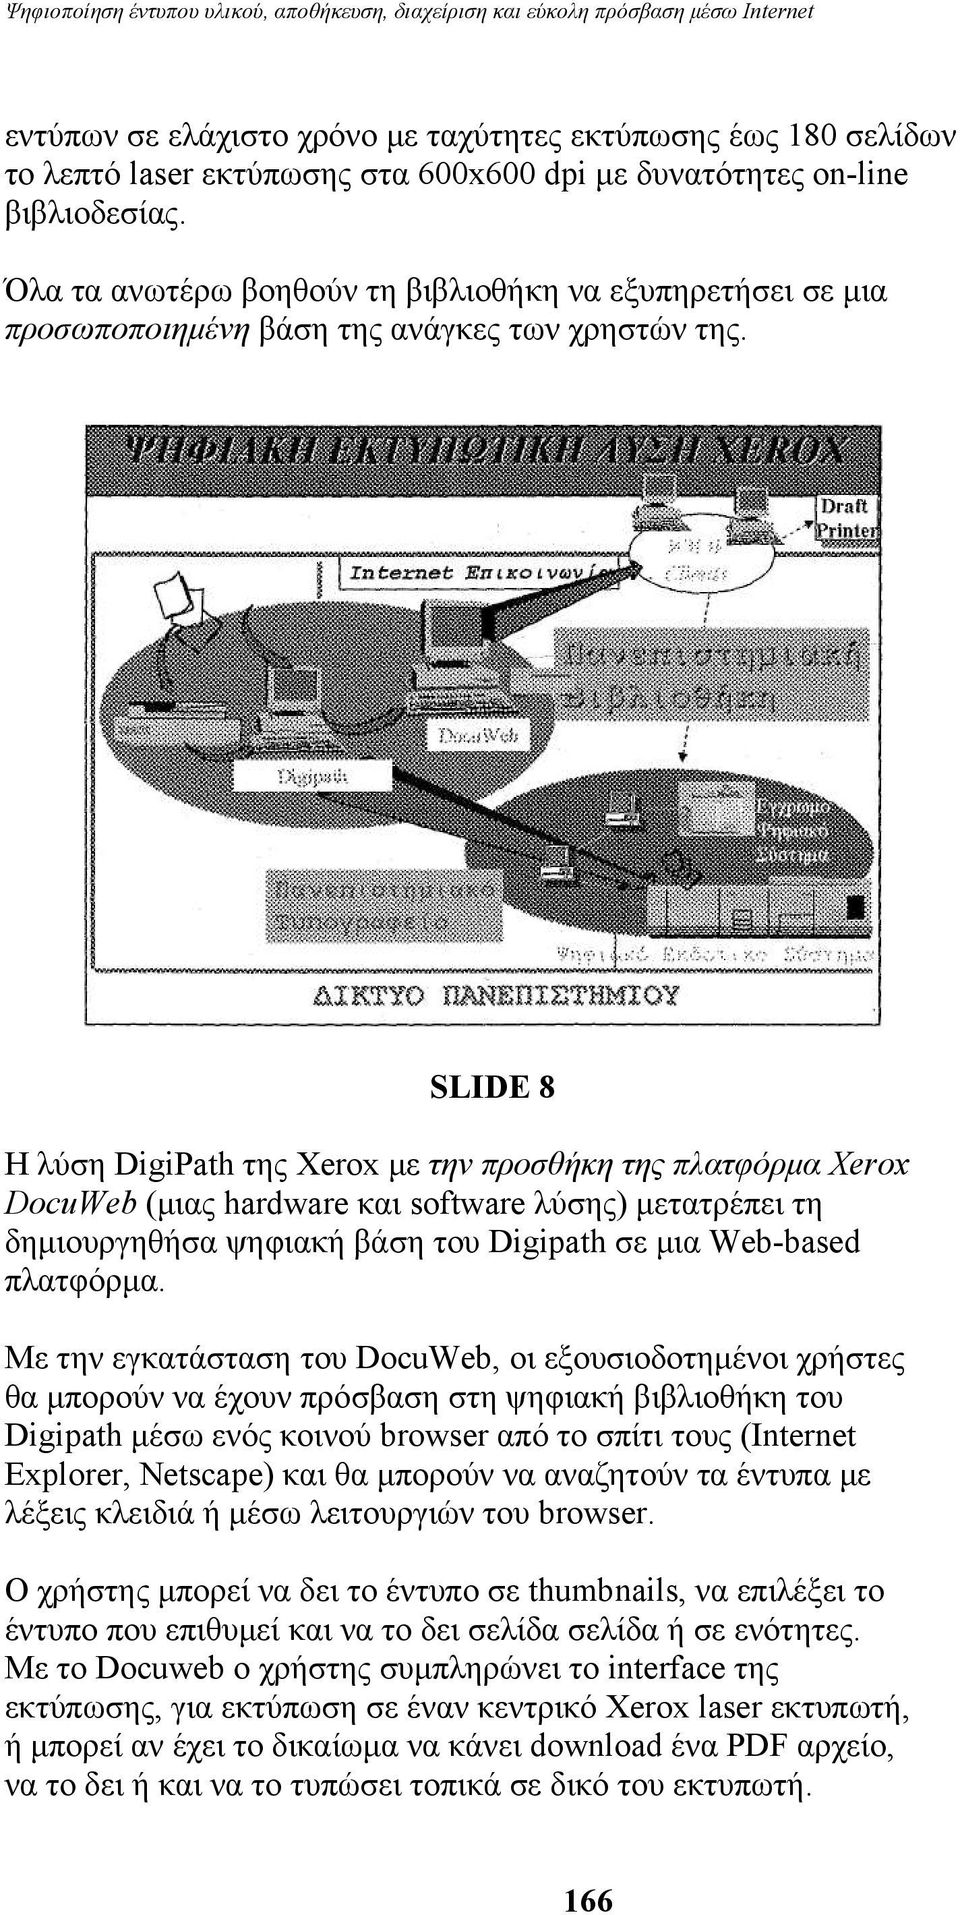 SLIDE 8 Η λύση DigiPath της Xerox με την προσθήκη της πλατφόρμα Xerox DocuWeb (μιας hardware και software λύσης) μετατρέπει τη δημιουργηθήσα ψηφιακή βάση του Digipath σε μια Web-based πλατφόρμα.